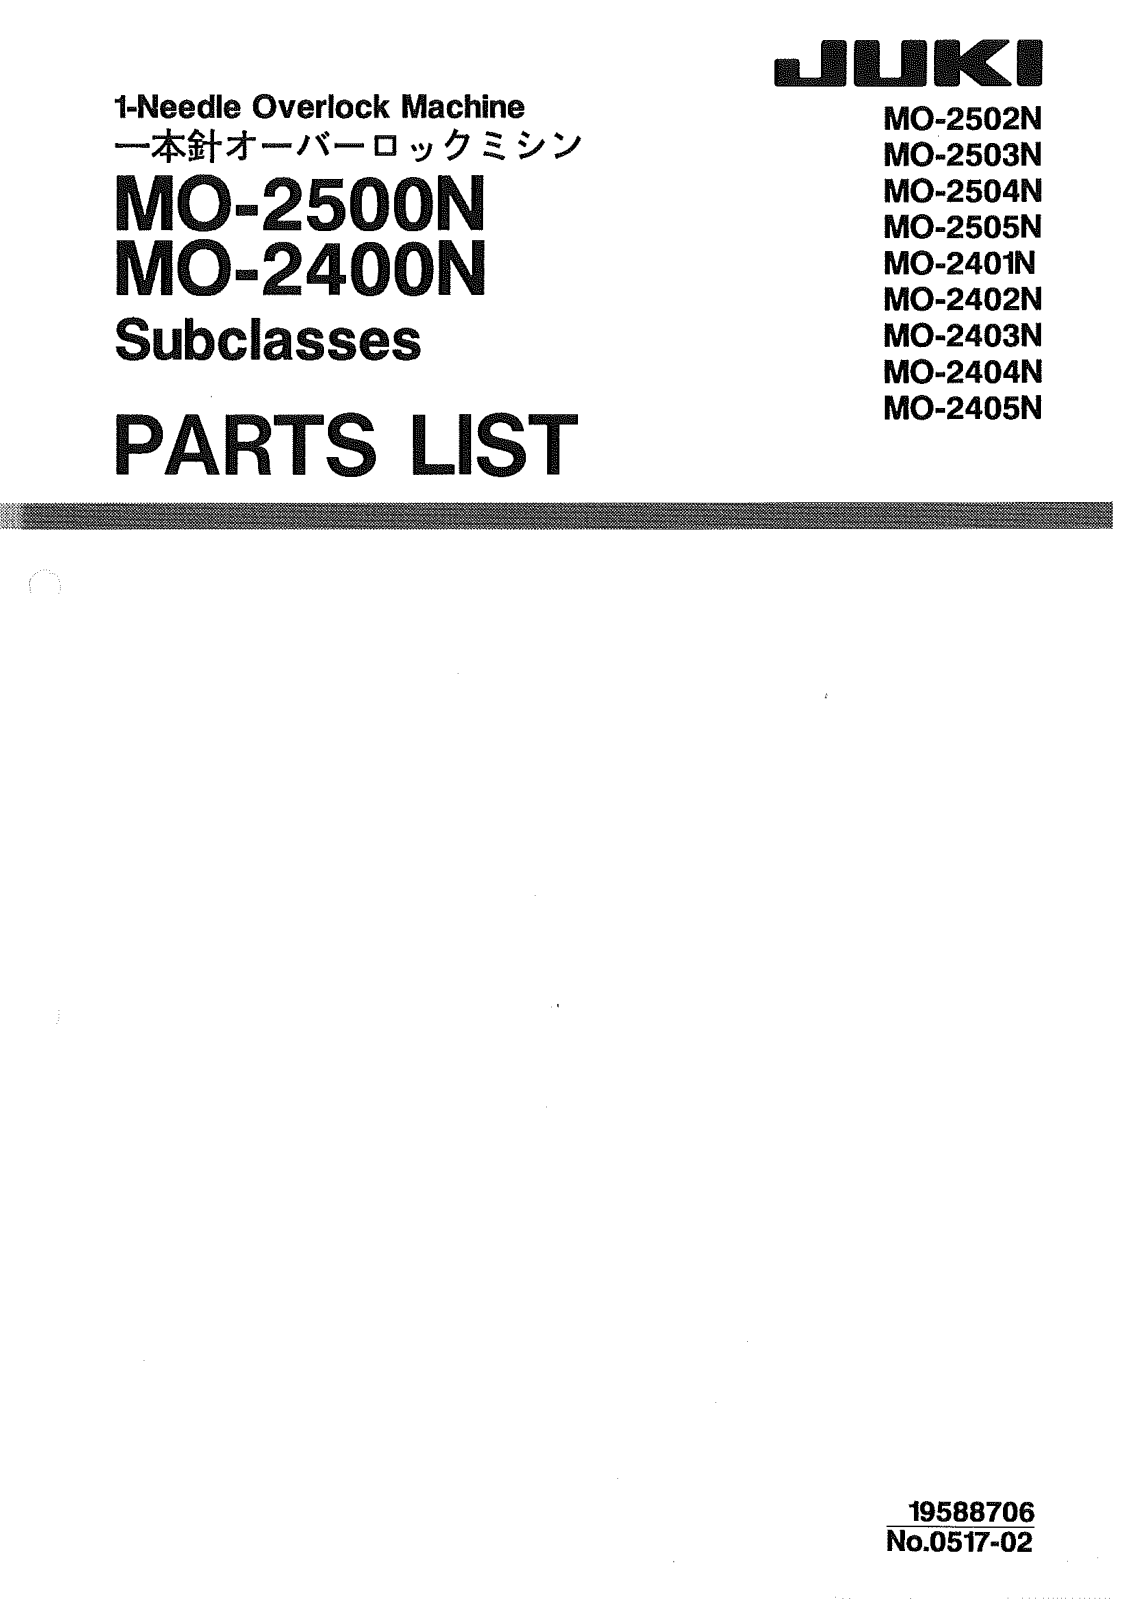 Juki MO-2401N, MO-2502N, MOG-2402N, MOG-2403N, MOG-2404N Parts List